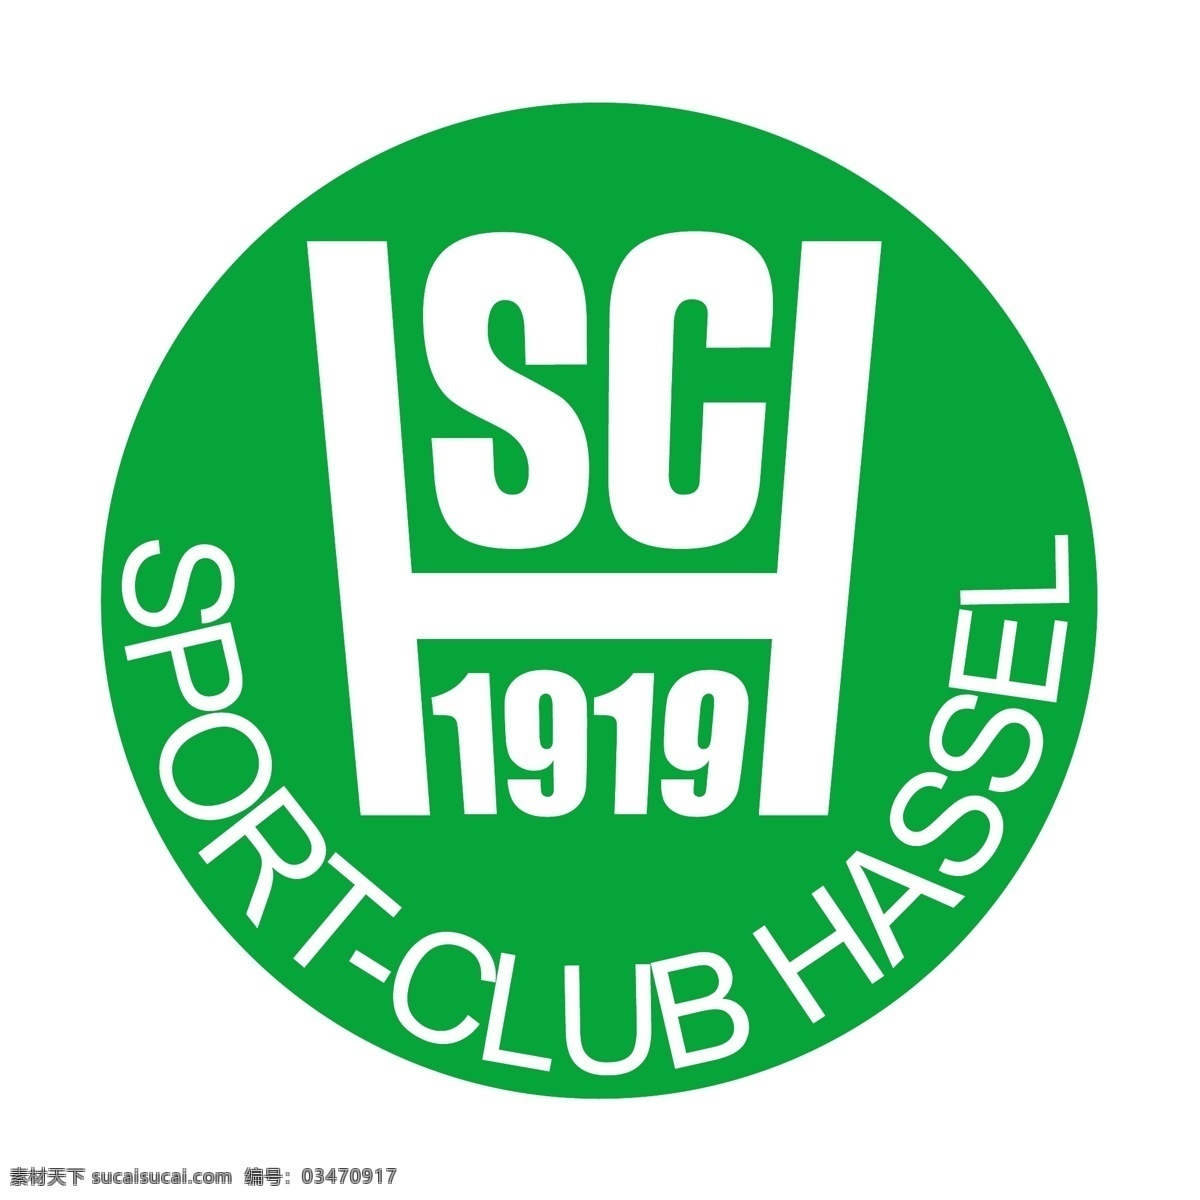 sc 激战 1919 免费 哈塞尔 标志 标识 sc哈塞尔 psd源文件 logo设计